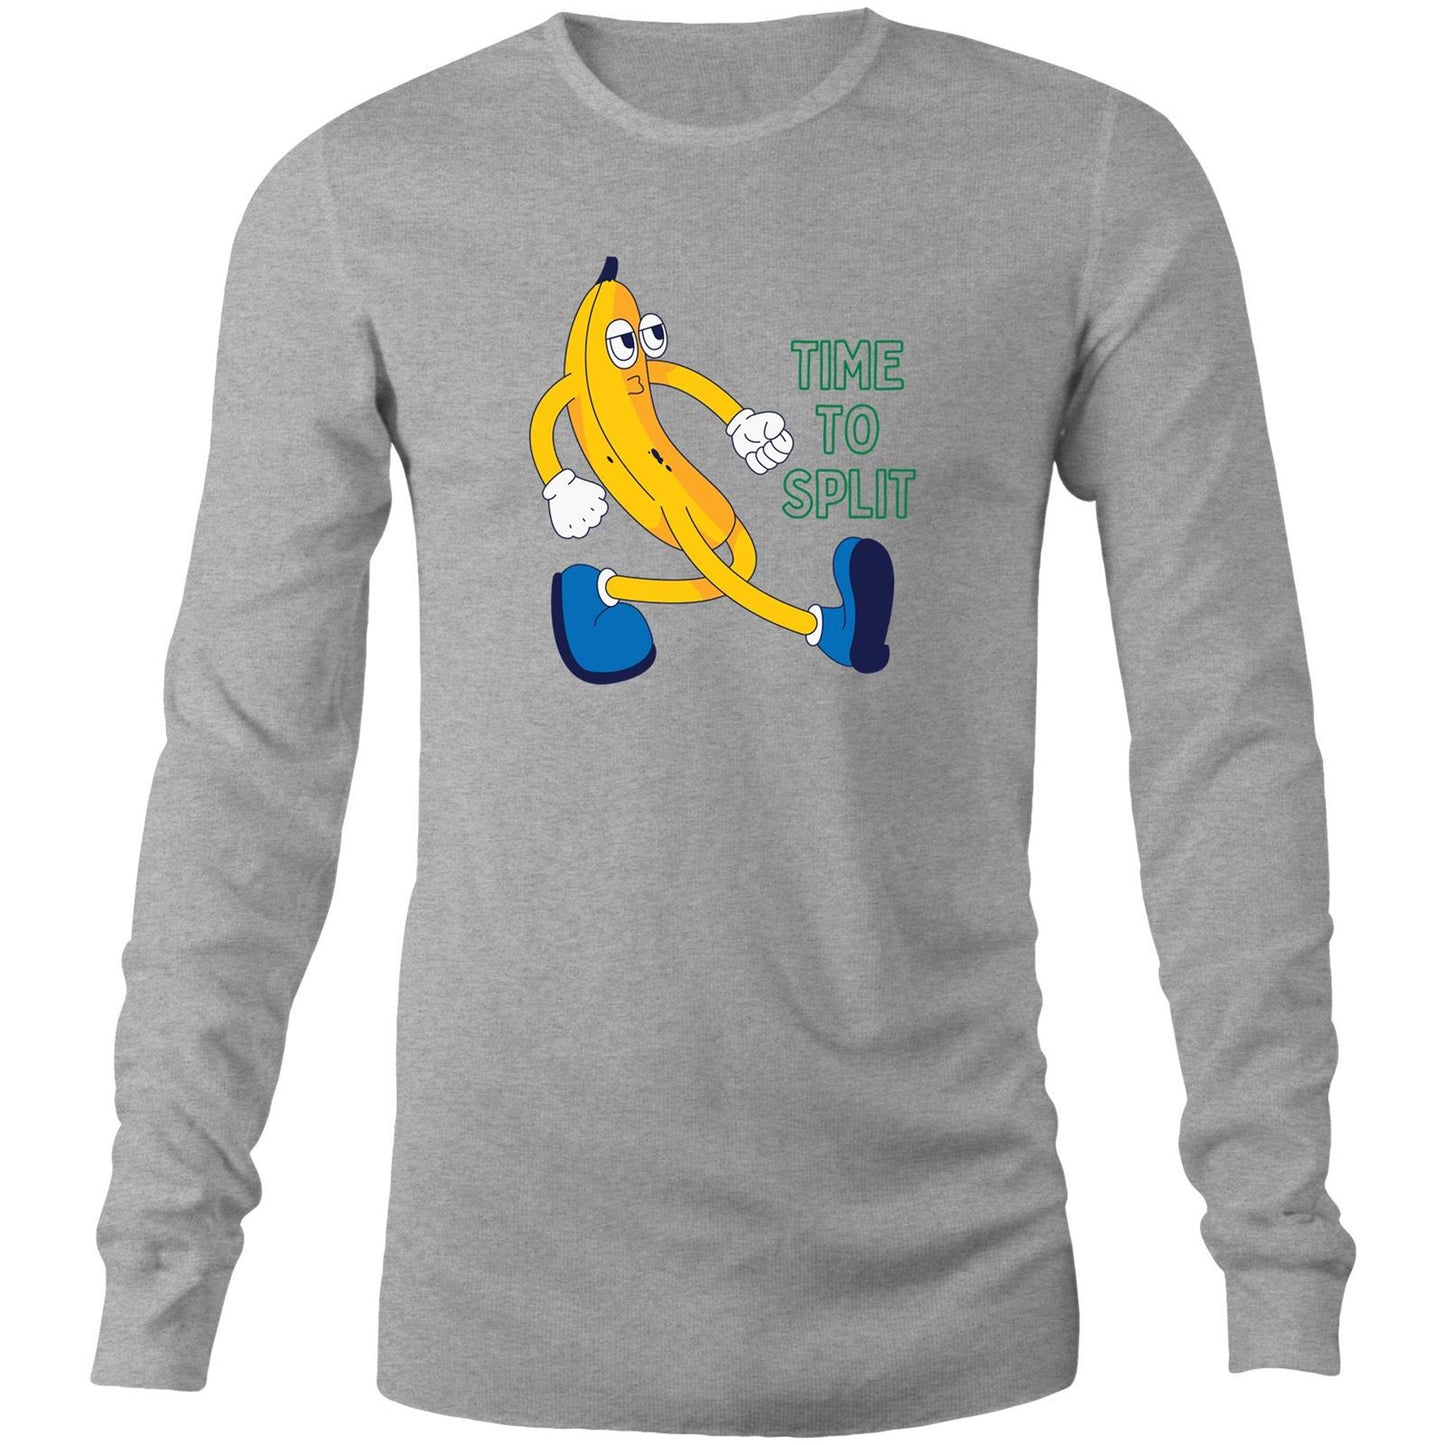 Banana, Time To Split - Long Sleeve T-shirt Grey Marle Unisex Long Sleeve T-shirt Funny